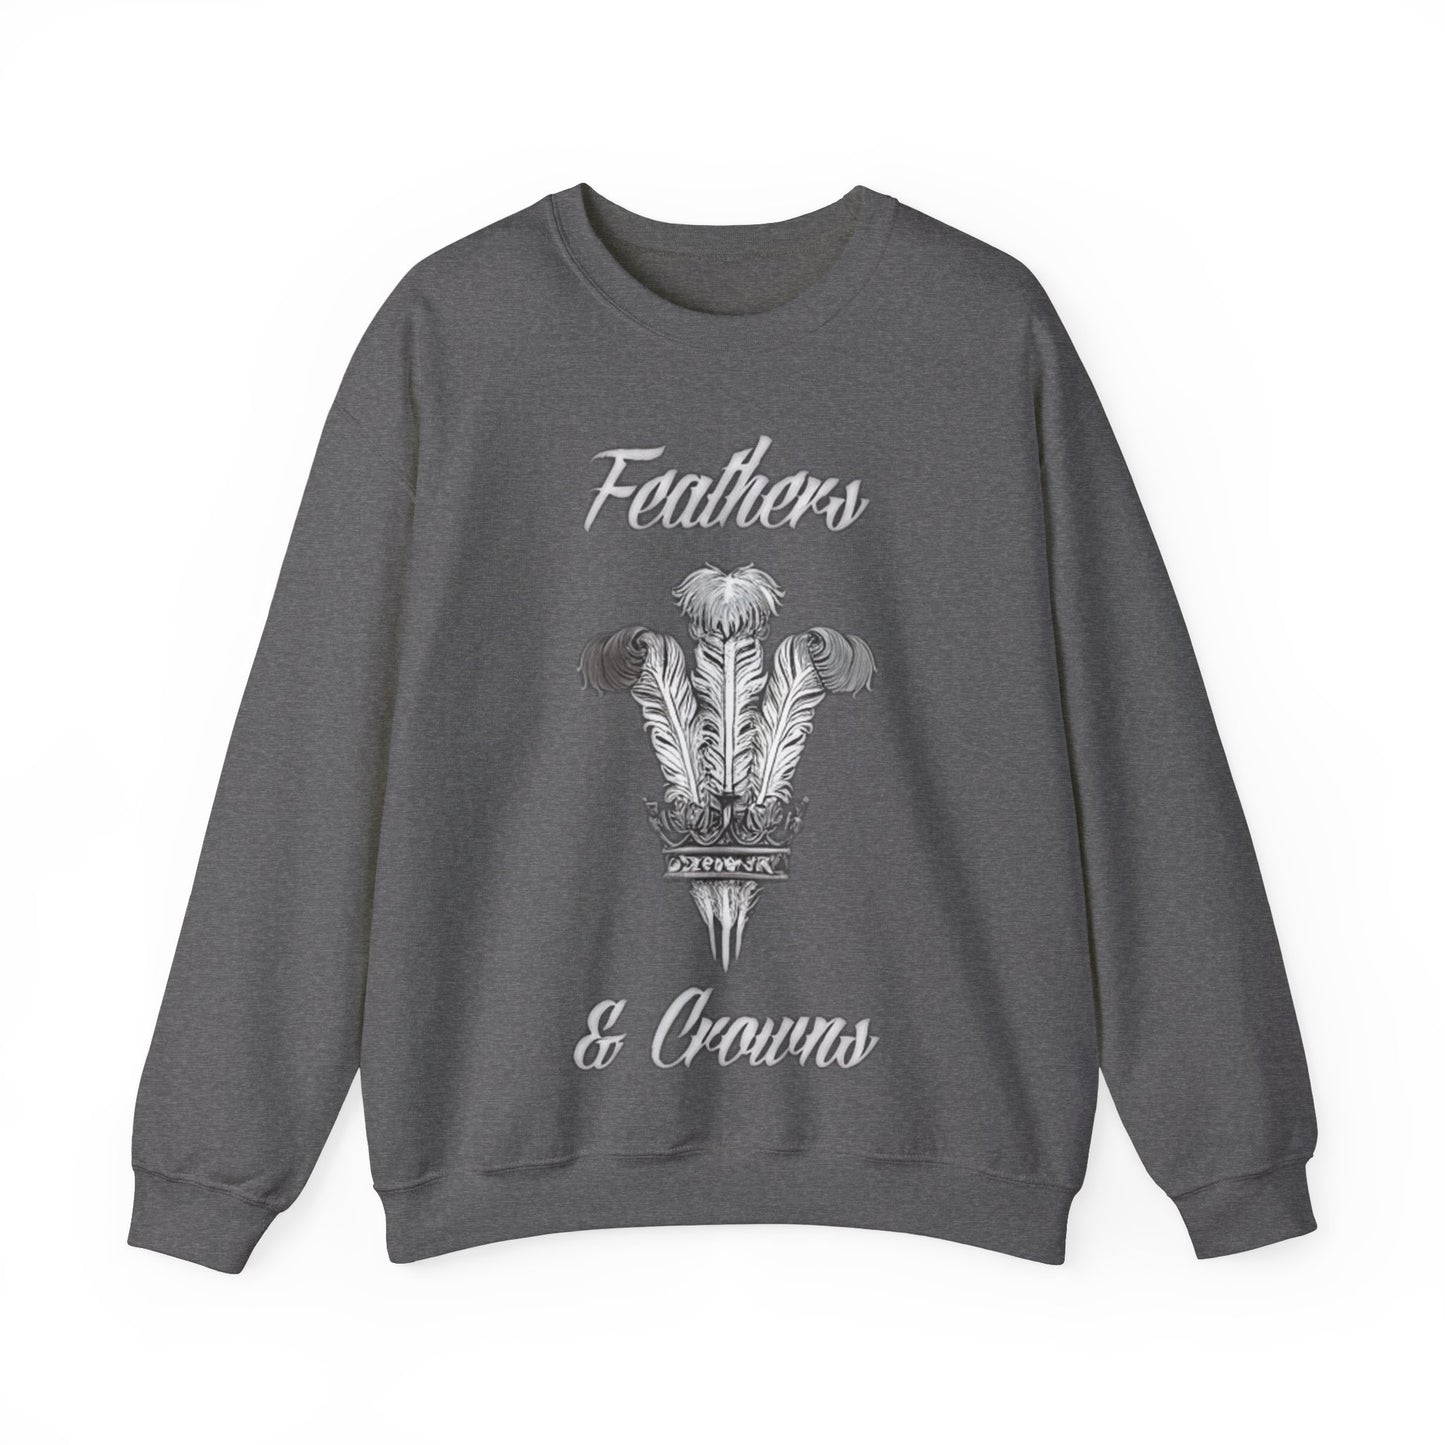 Feathers and Crowns B/W Logo Sweatshirt